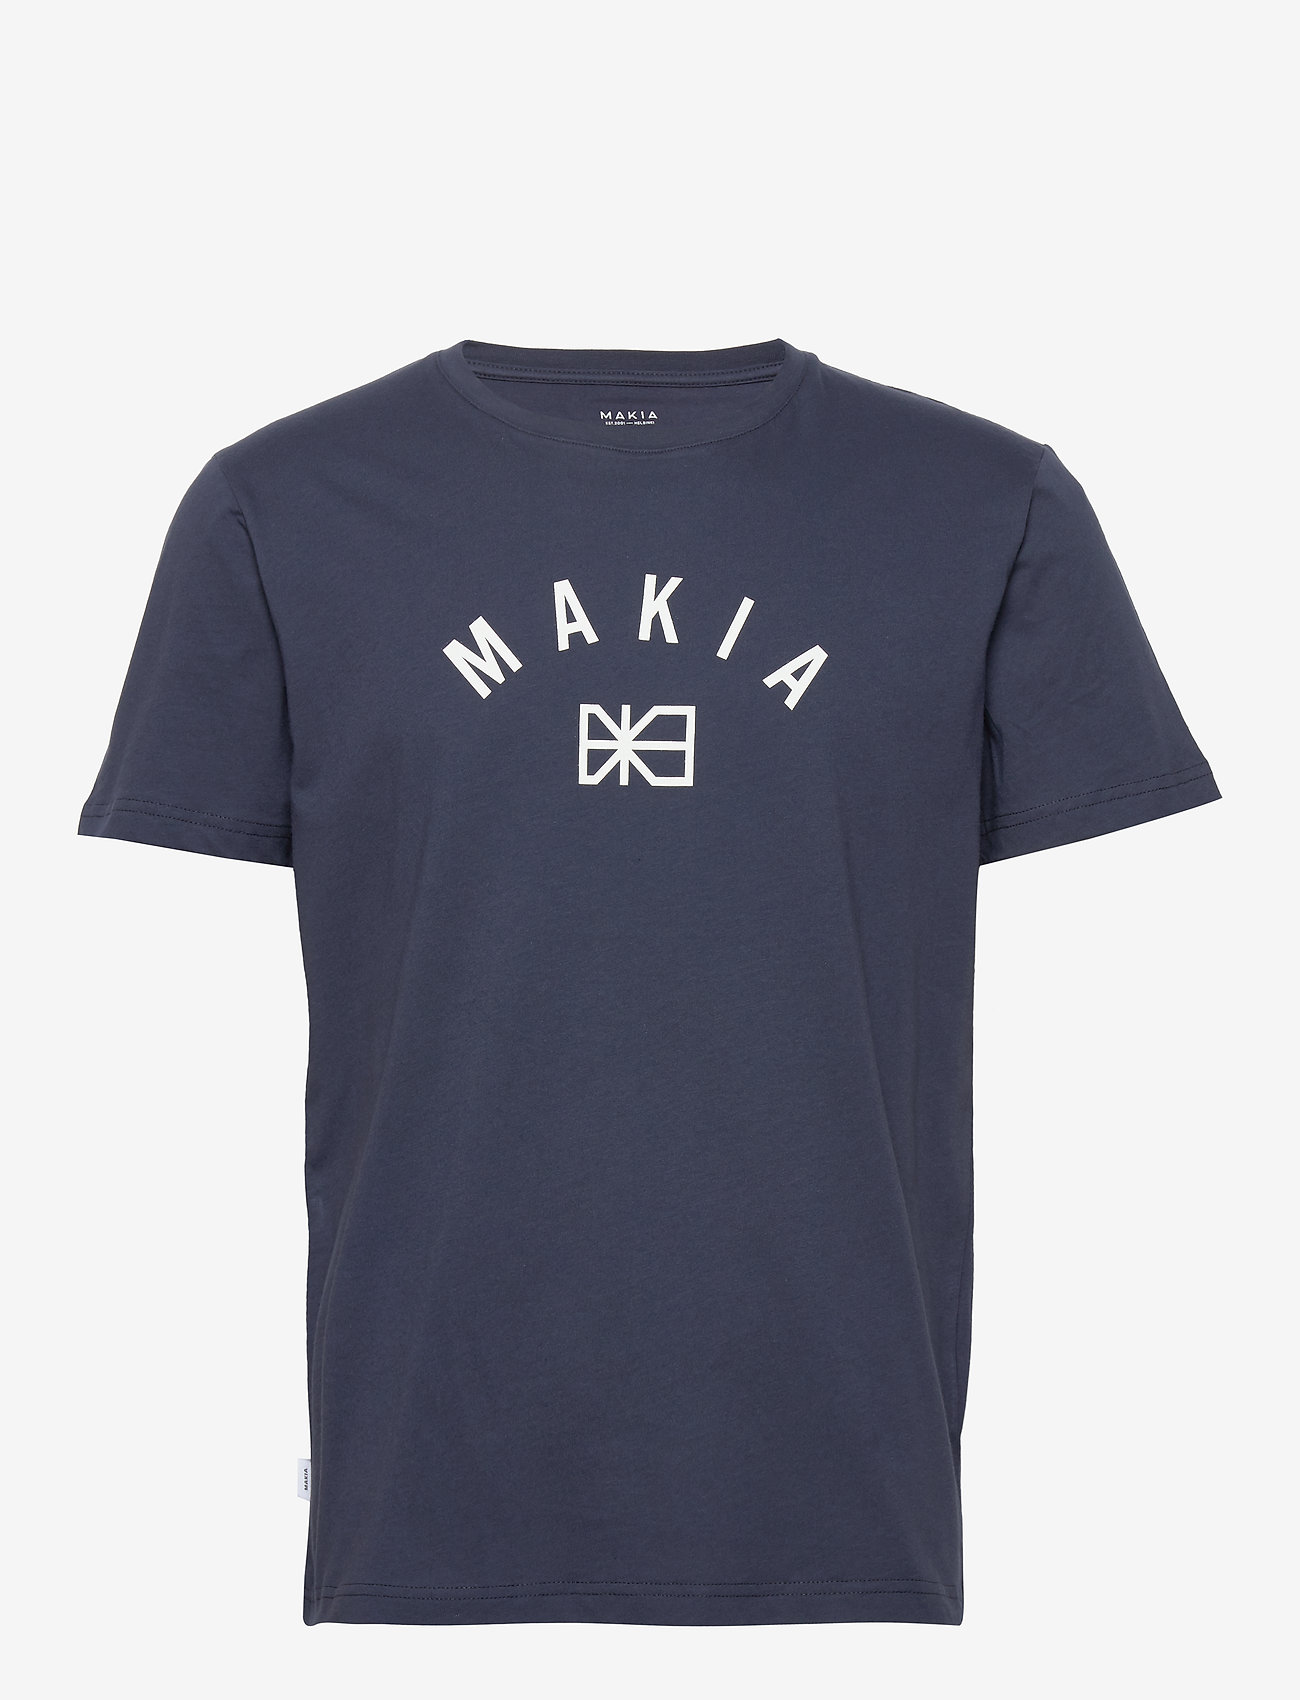 Makia Brand T Shirt T Shirts Boozt Com